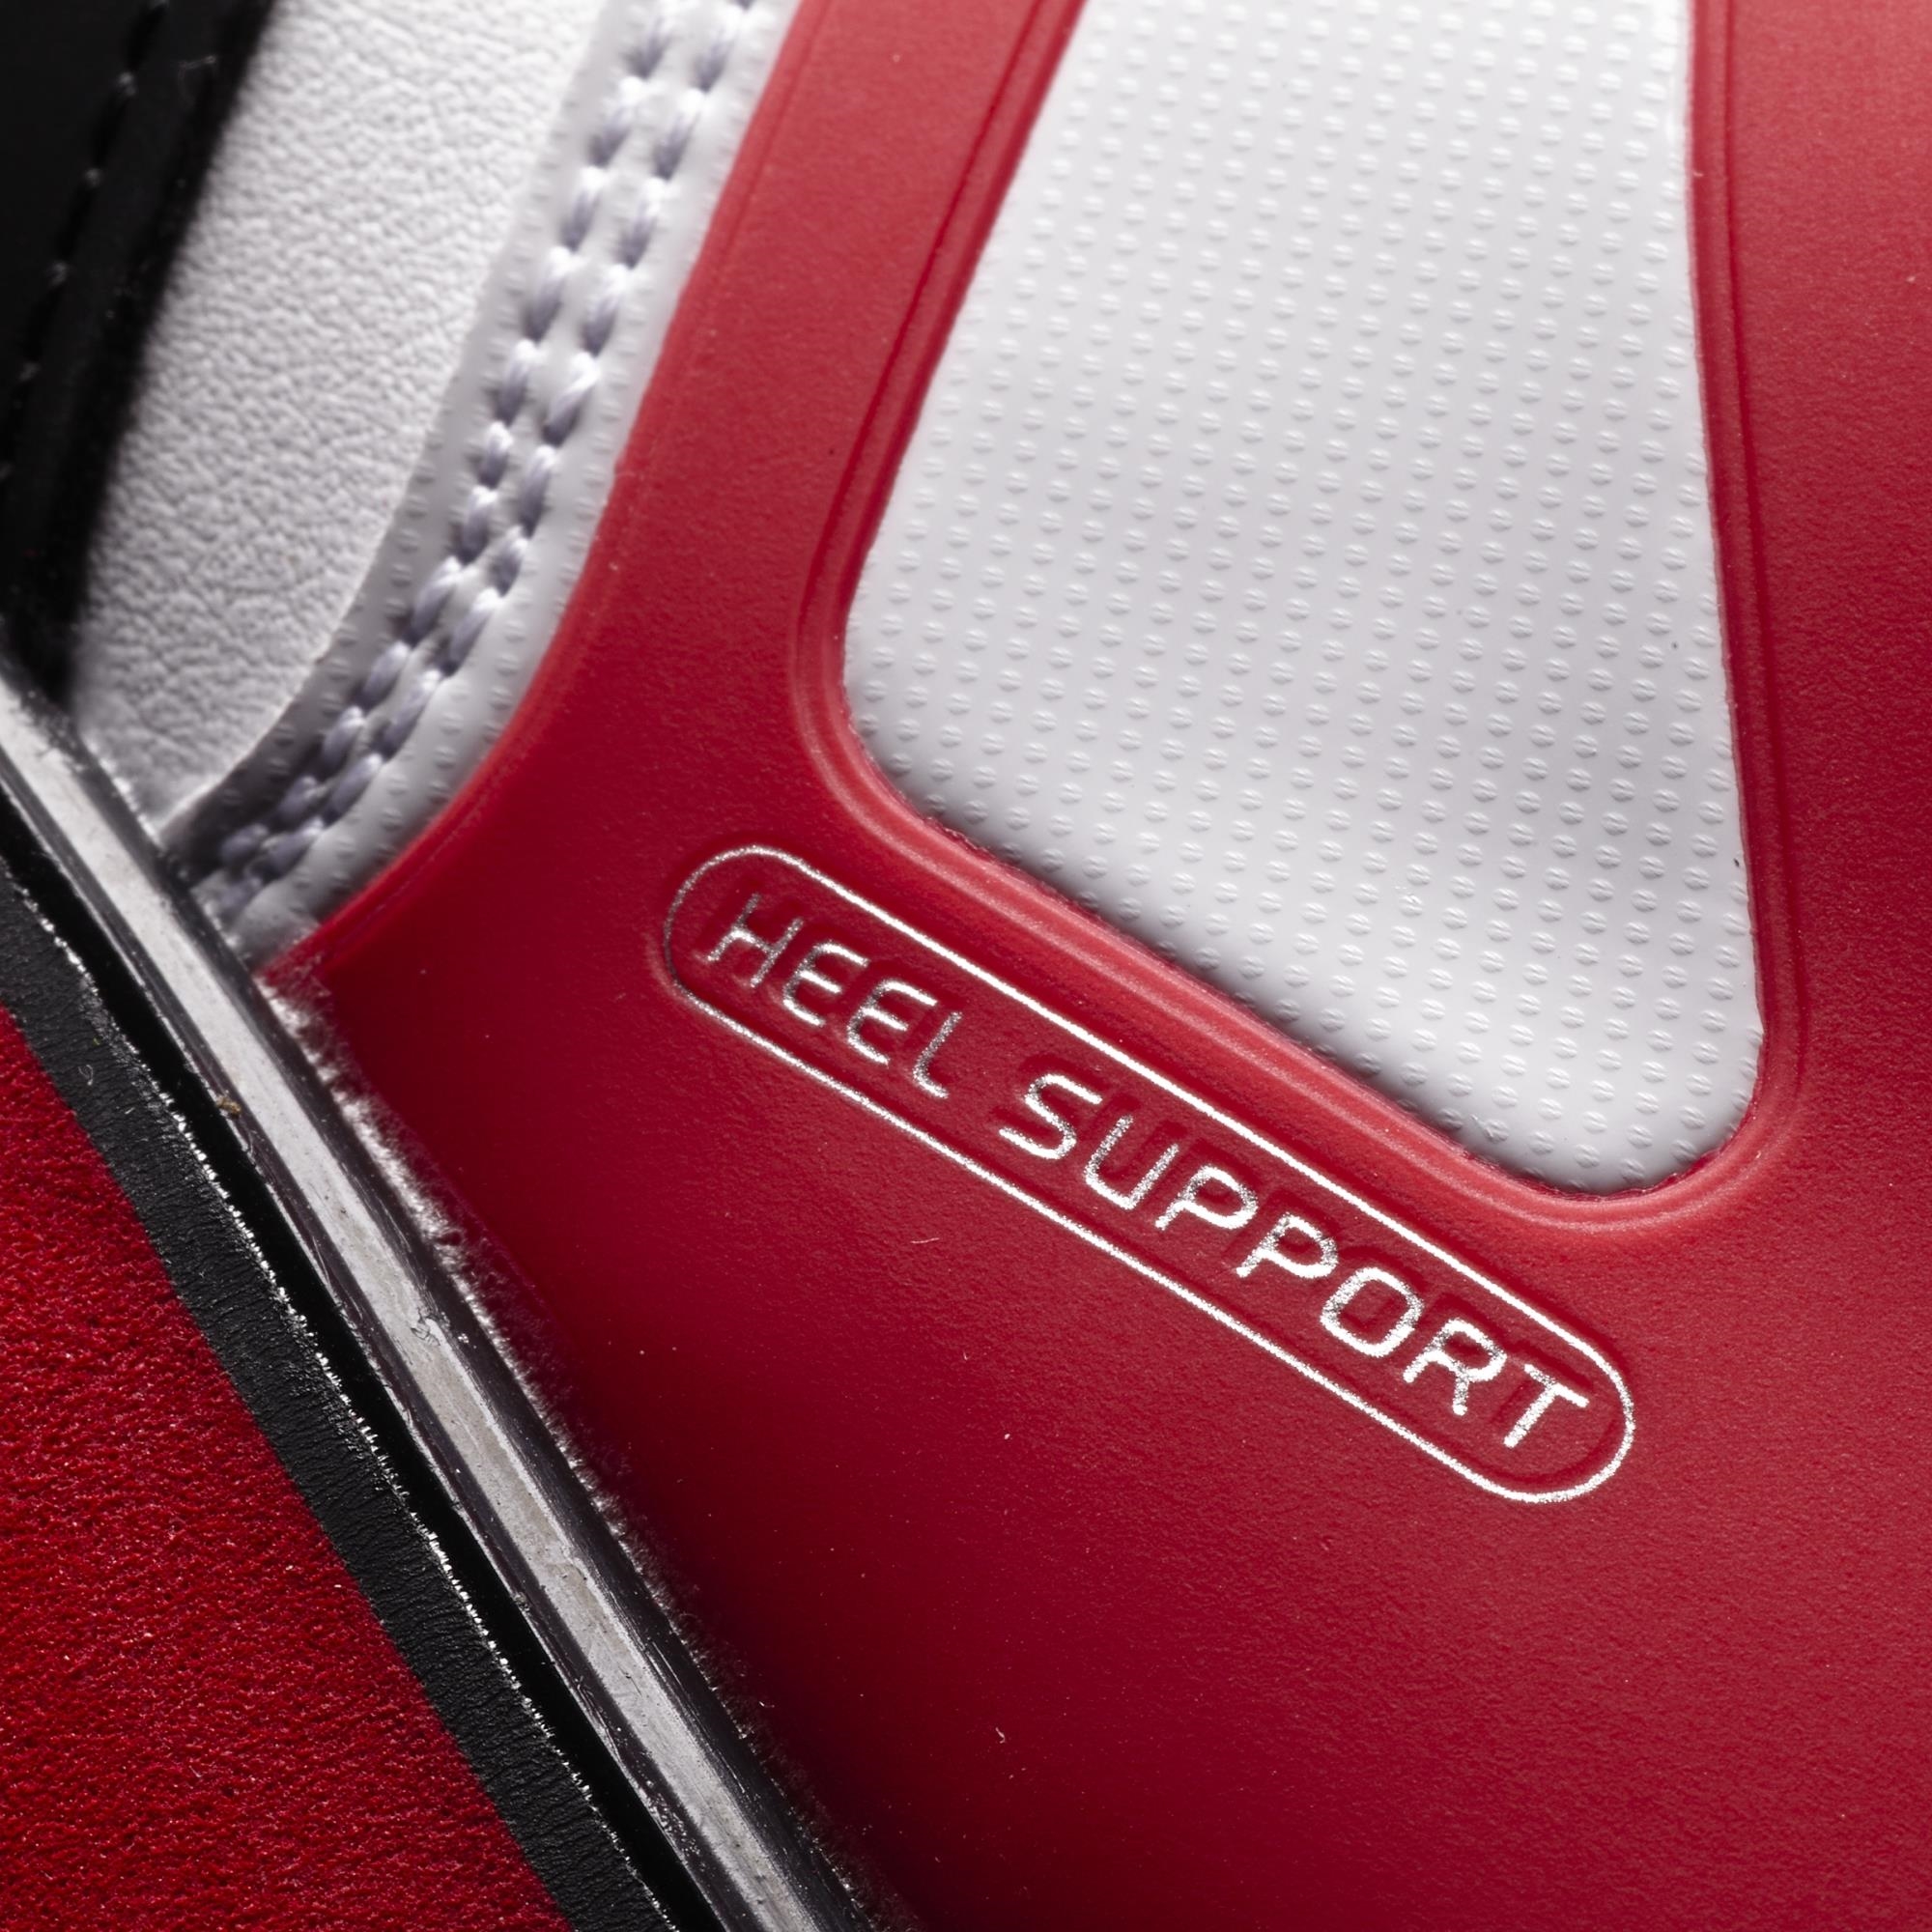 Adidas Weightlifting Powerperfect 2.0 heel